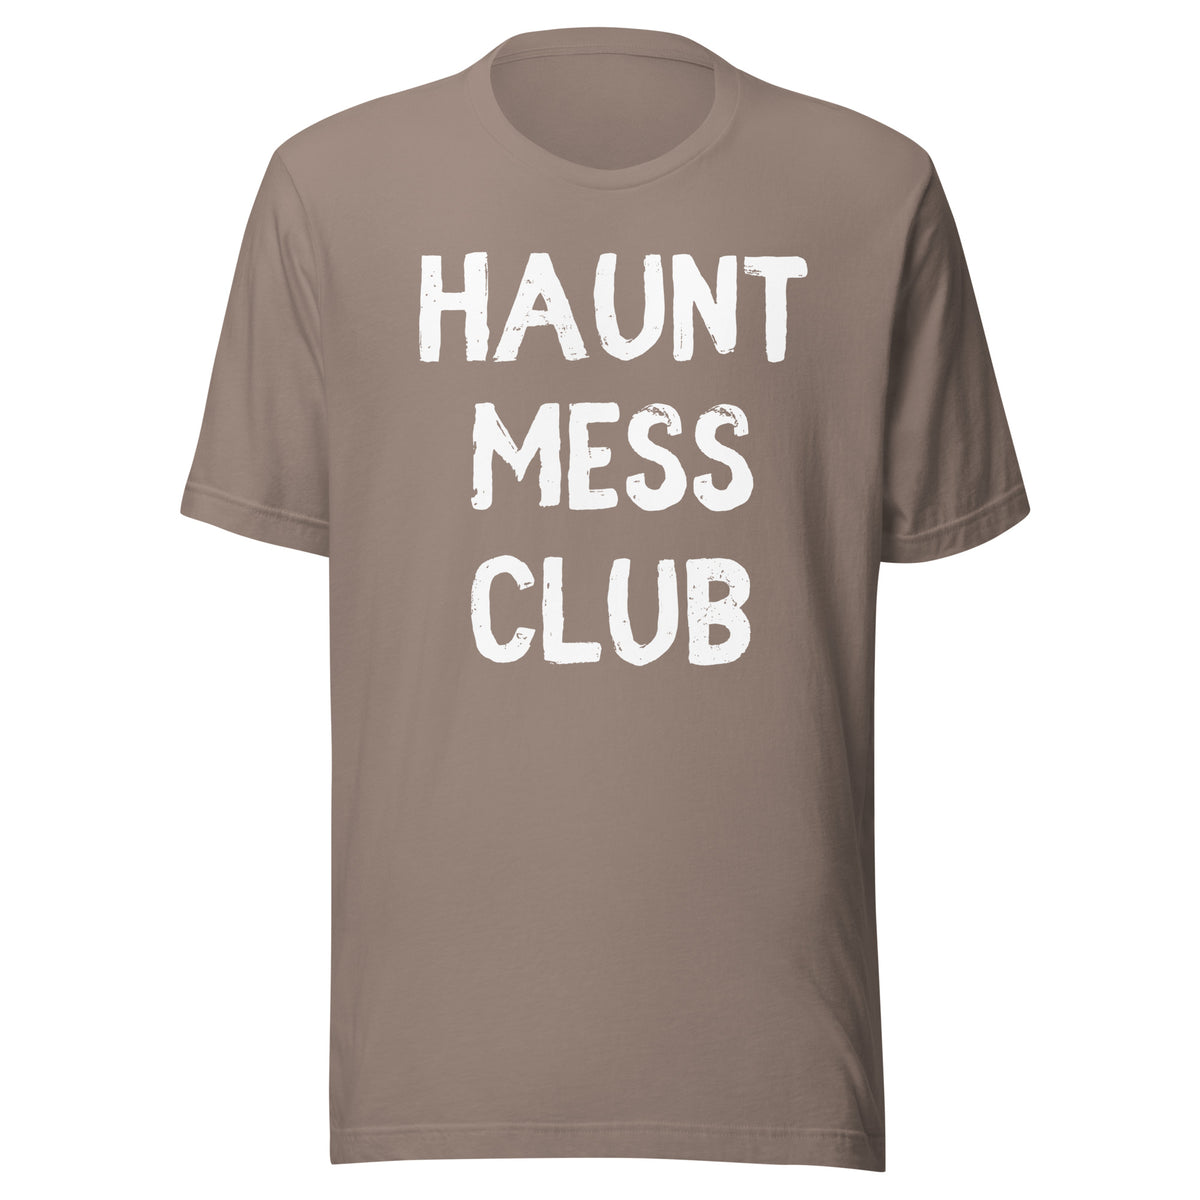 Haunt Mess Club t-shirt